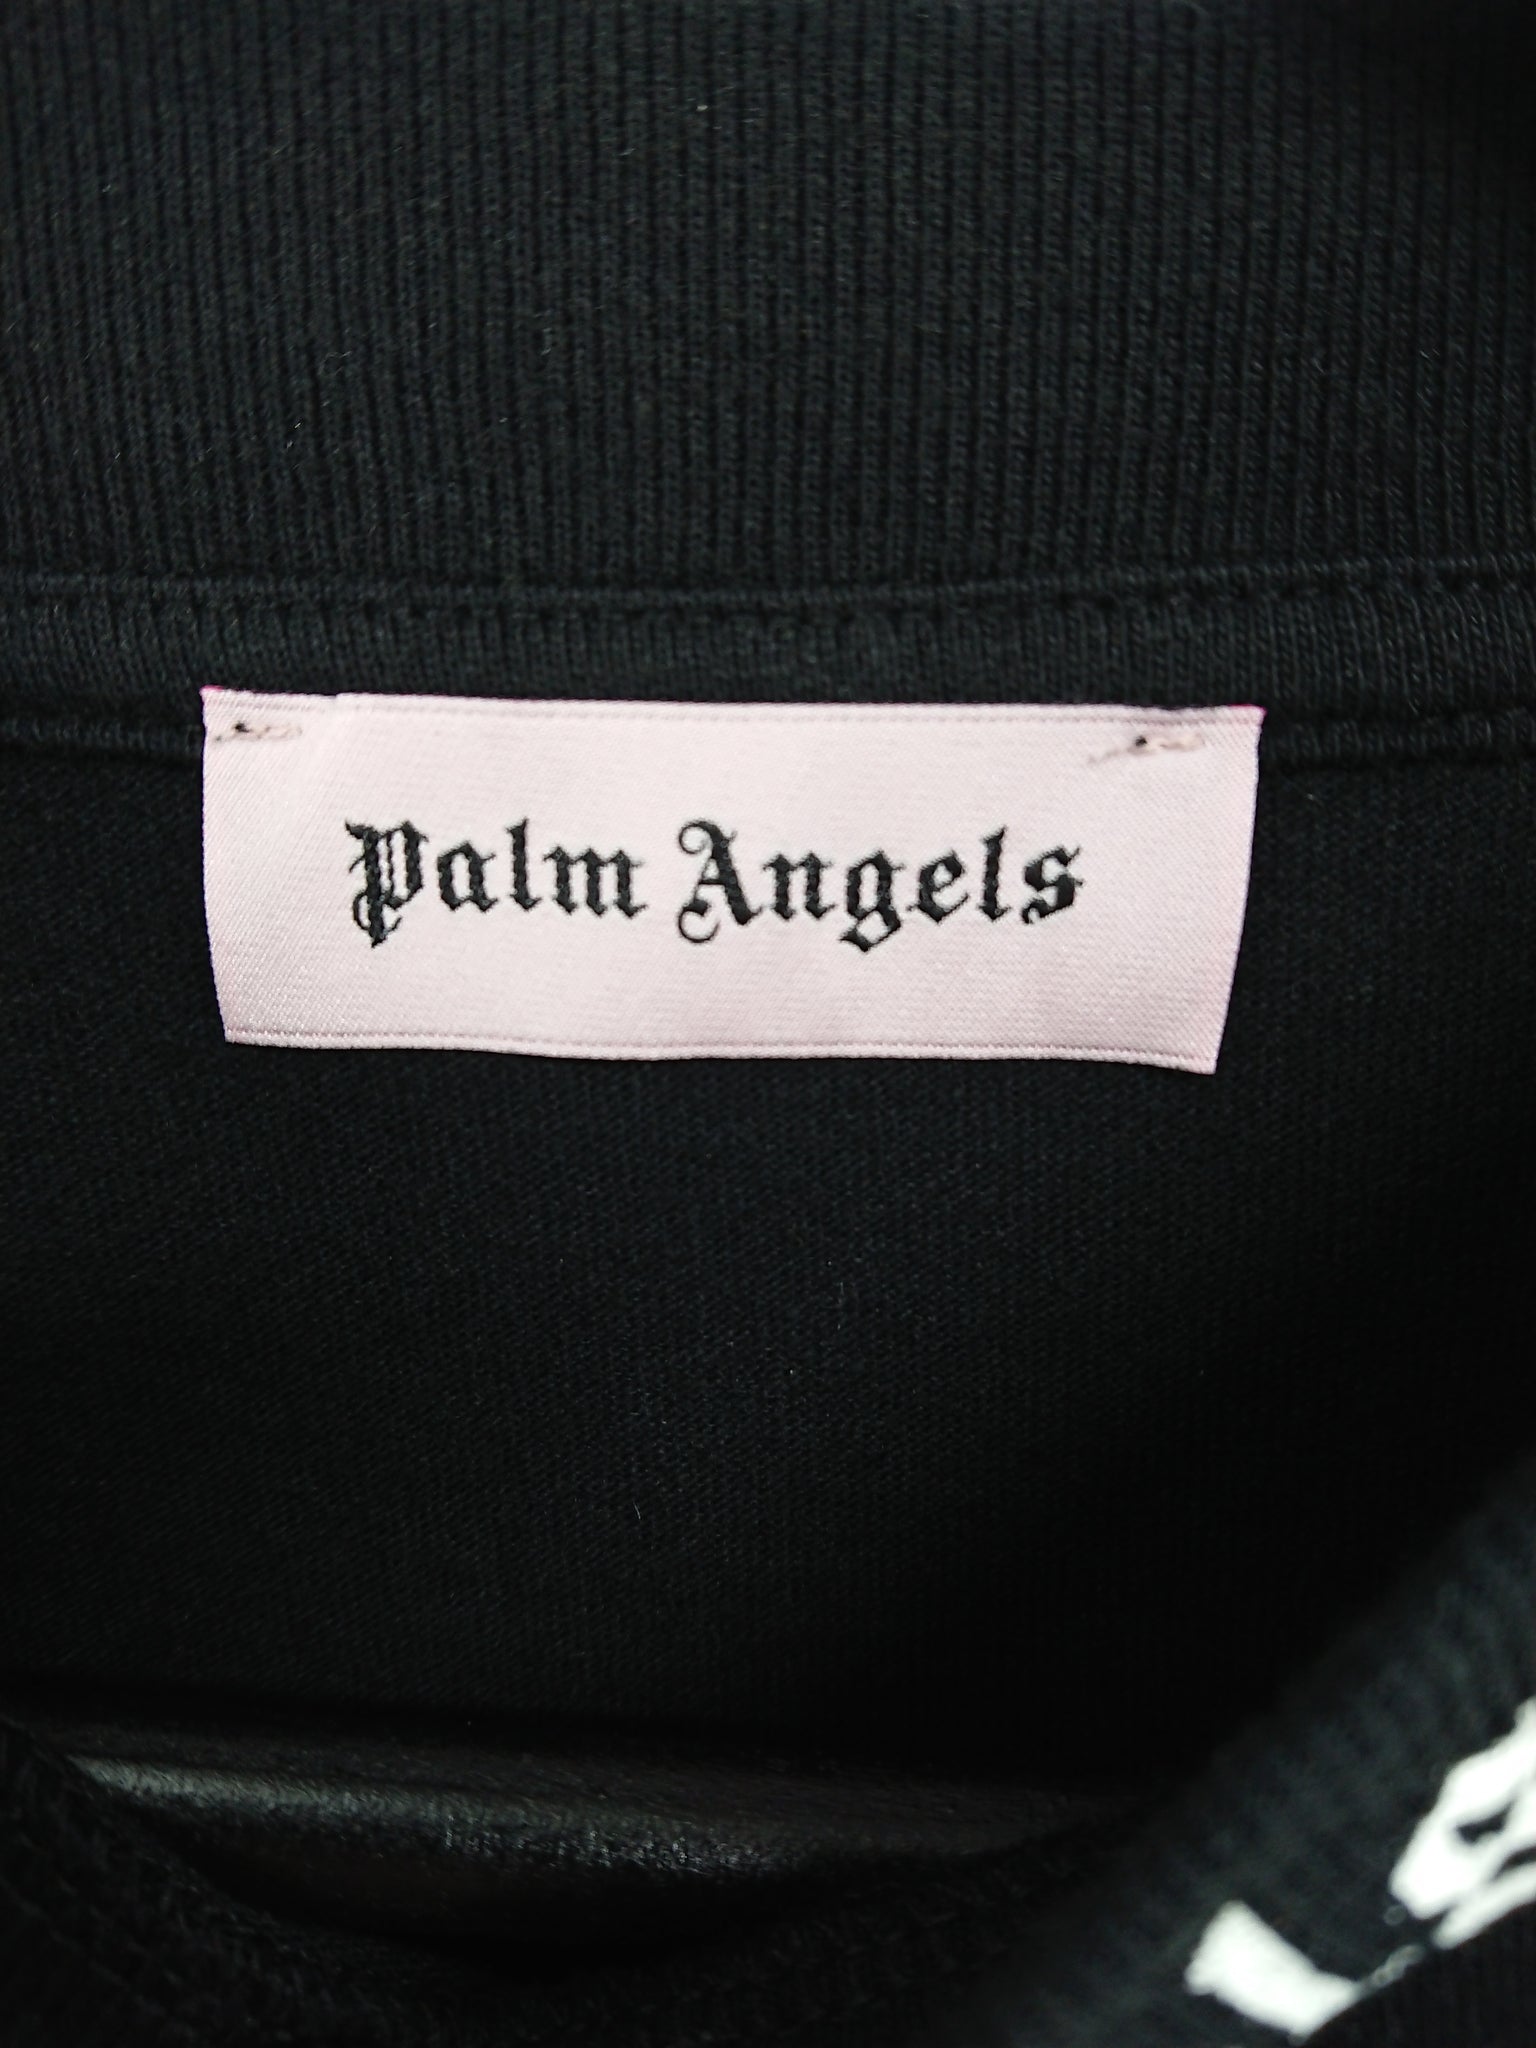 palm angels tee legit check